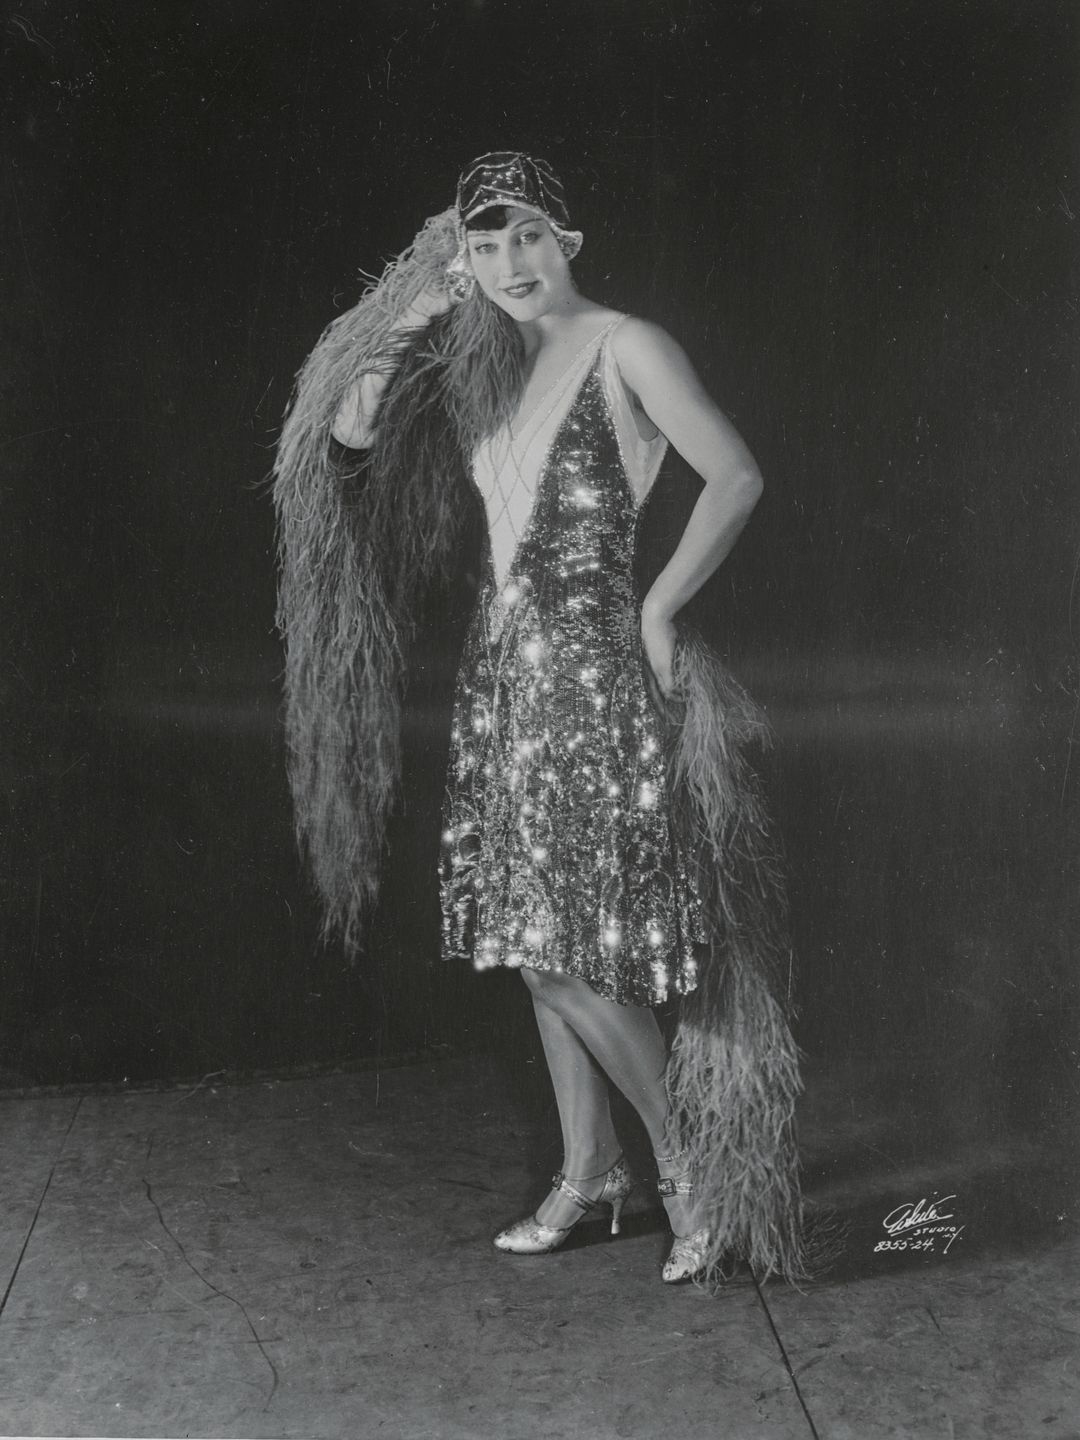 Cleo Mayfield rocks a super glitzy dress in 1927 